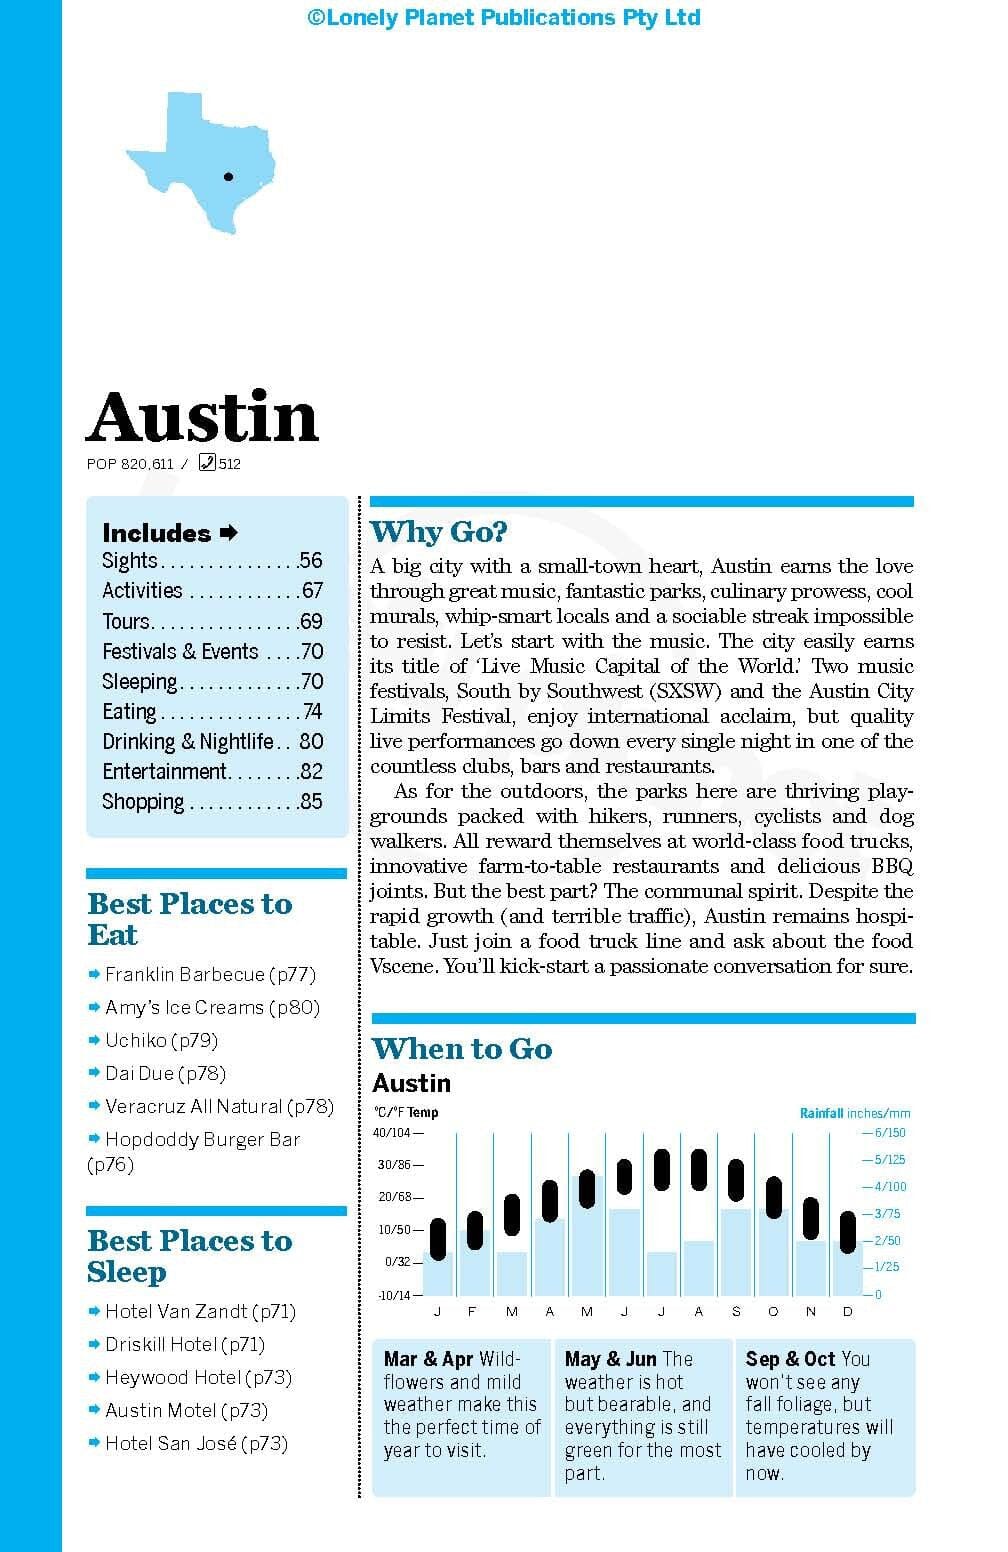 Guide de voyage (en anglais) - Texas | Lonely Planet guide de voyage Lonely Planet EN 